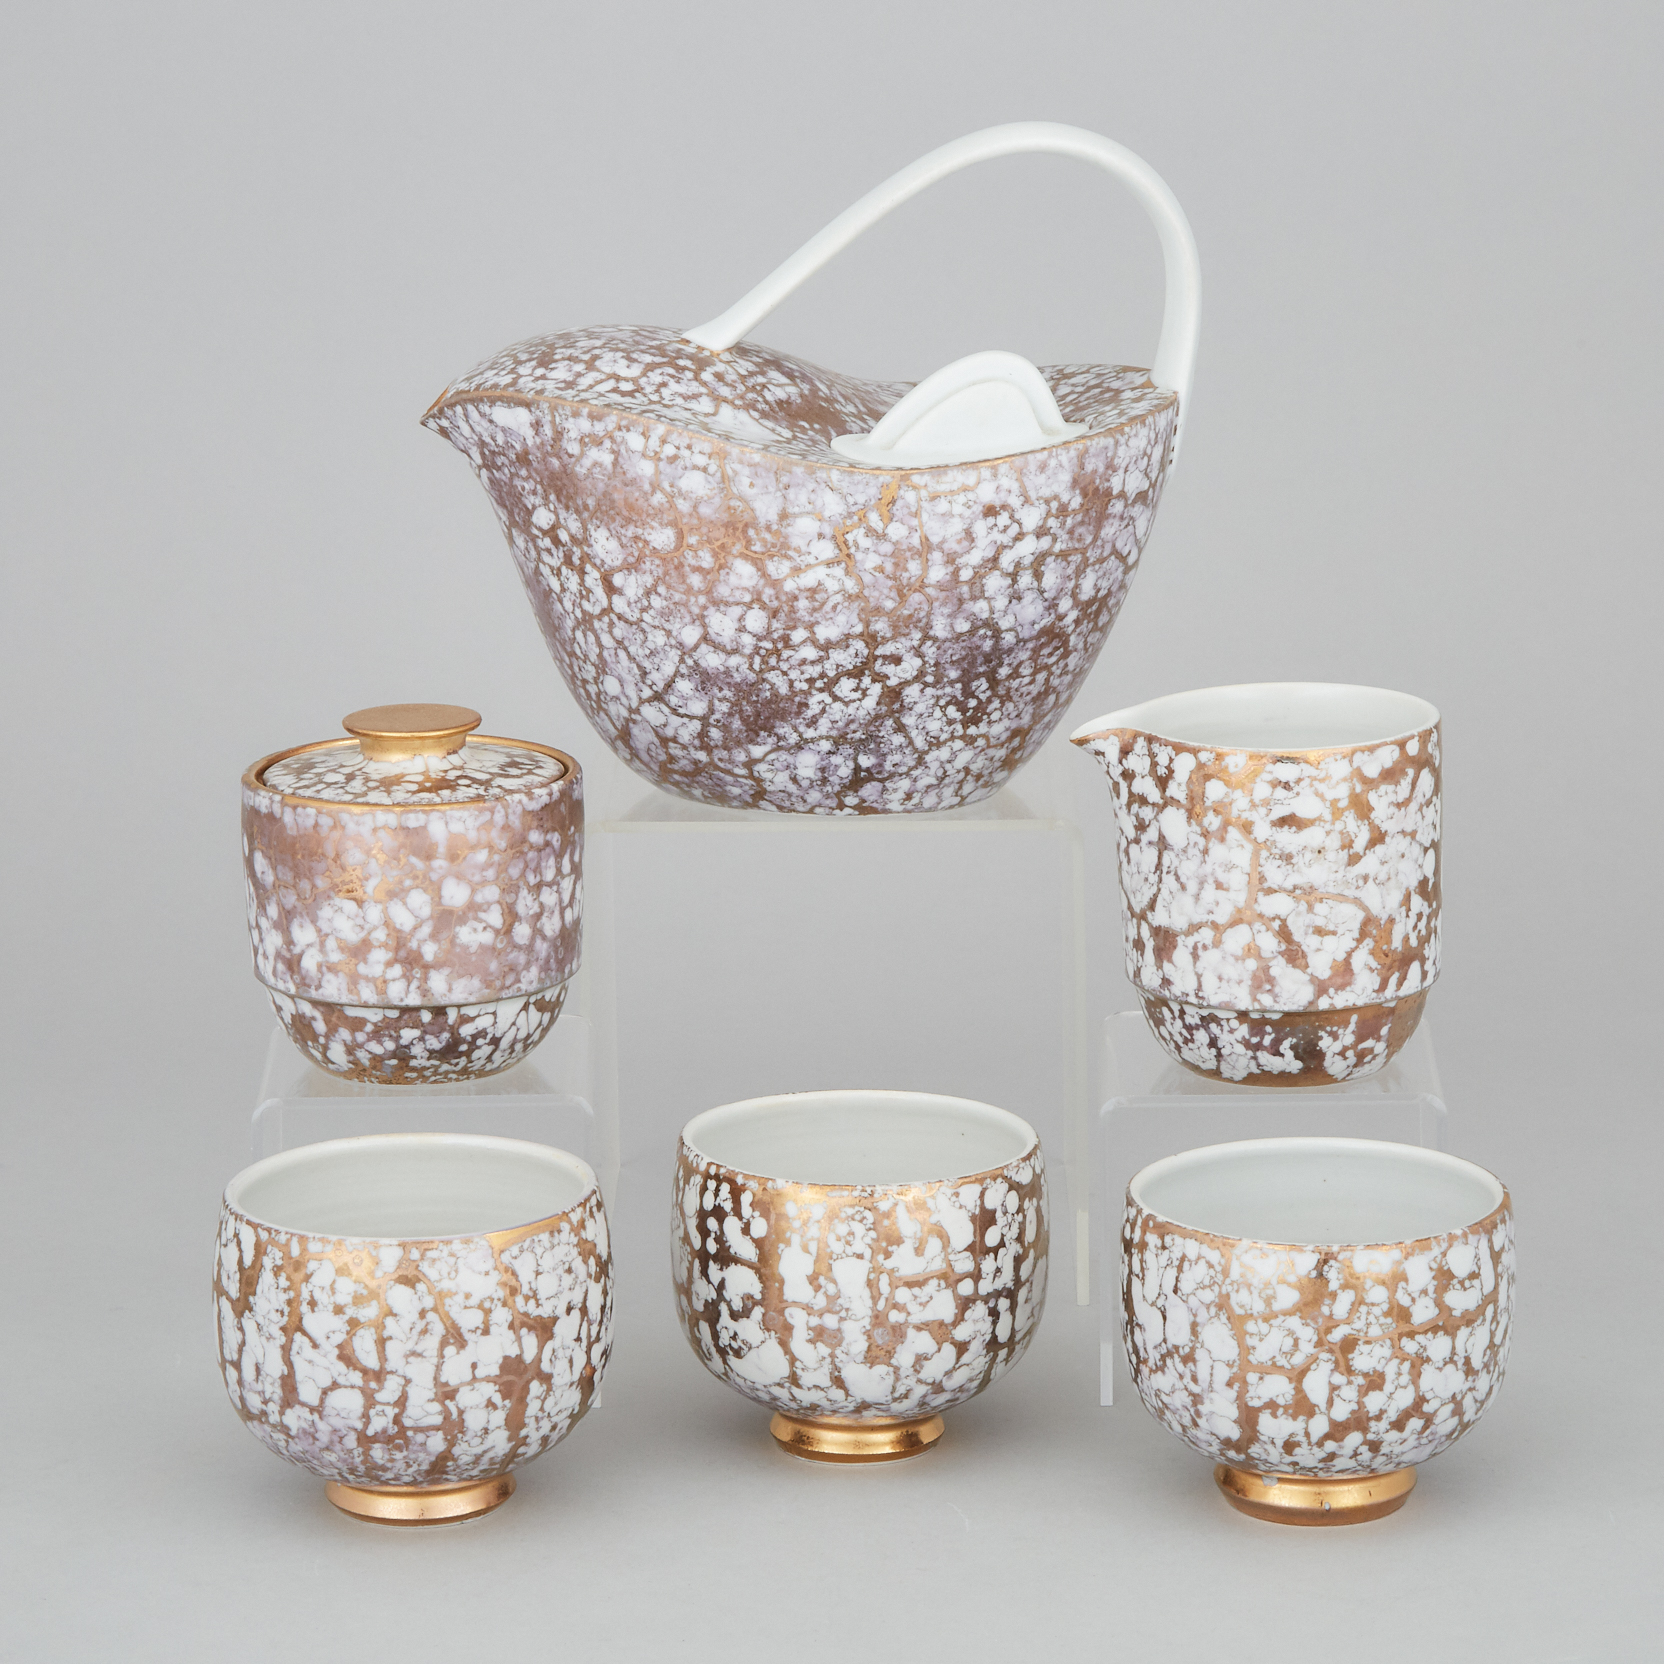 Pauline Pelletier (Canadian, b.1938), Gold Lustre Glazed Porcelain Tea Set, c.1994